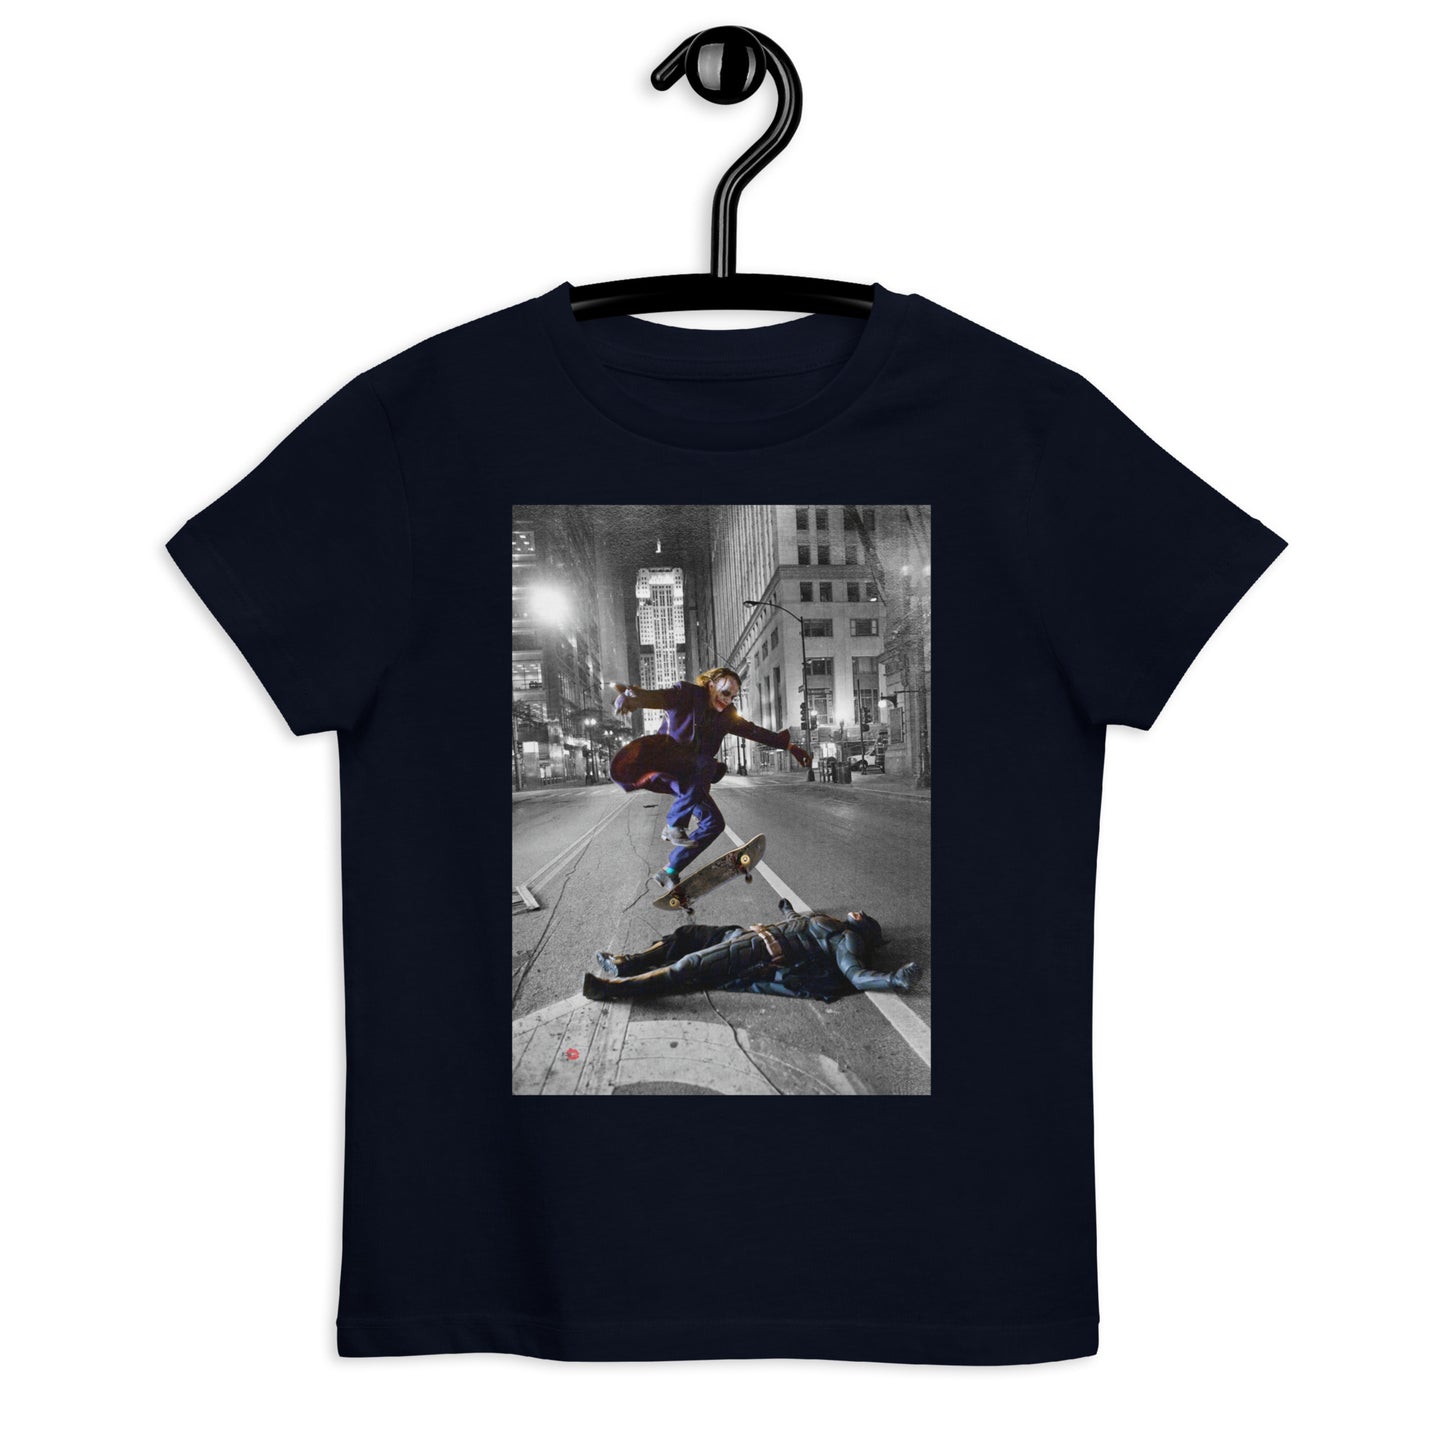 Joker Skateboarding KiSS Organic cotton kids t-shirt - Batman Inspired Heath Ledger Christian Bale